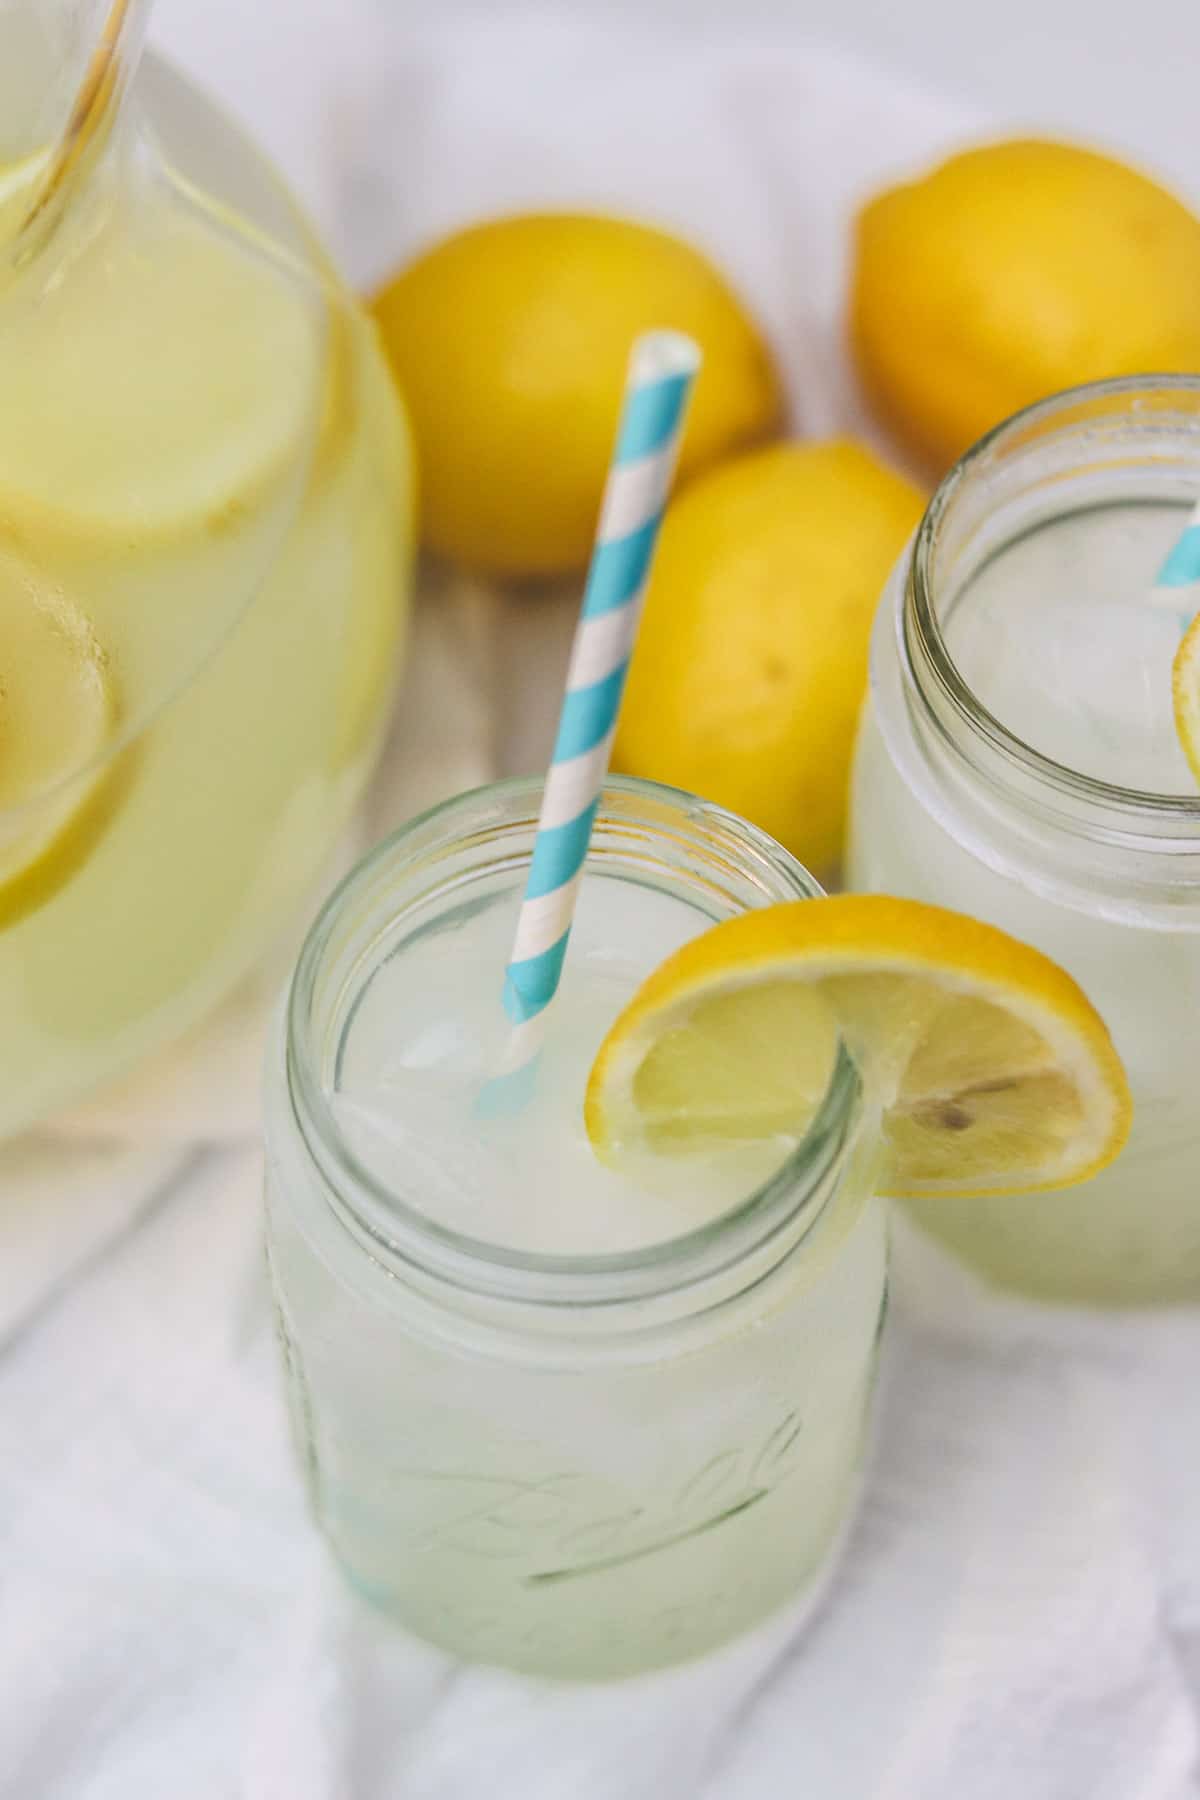 sugar-free lemonade in mason jar with lemon and paper straw